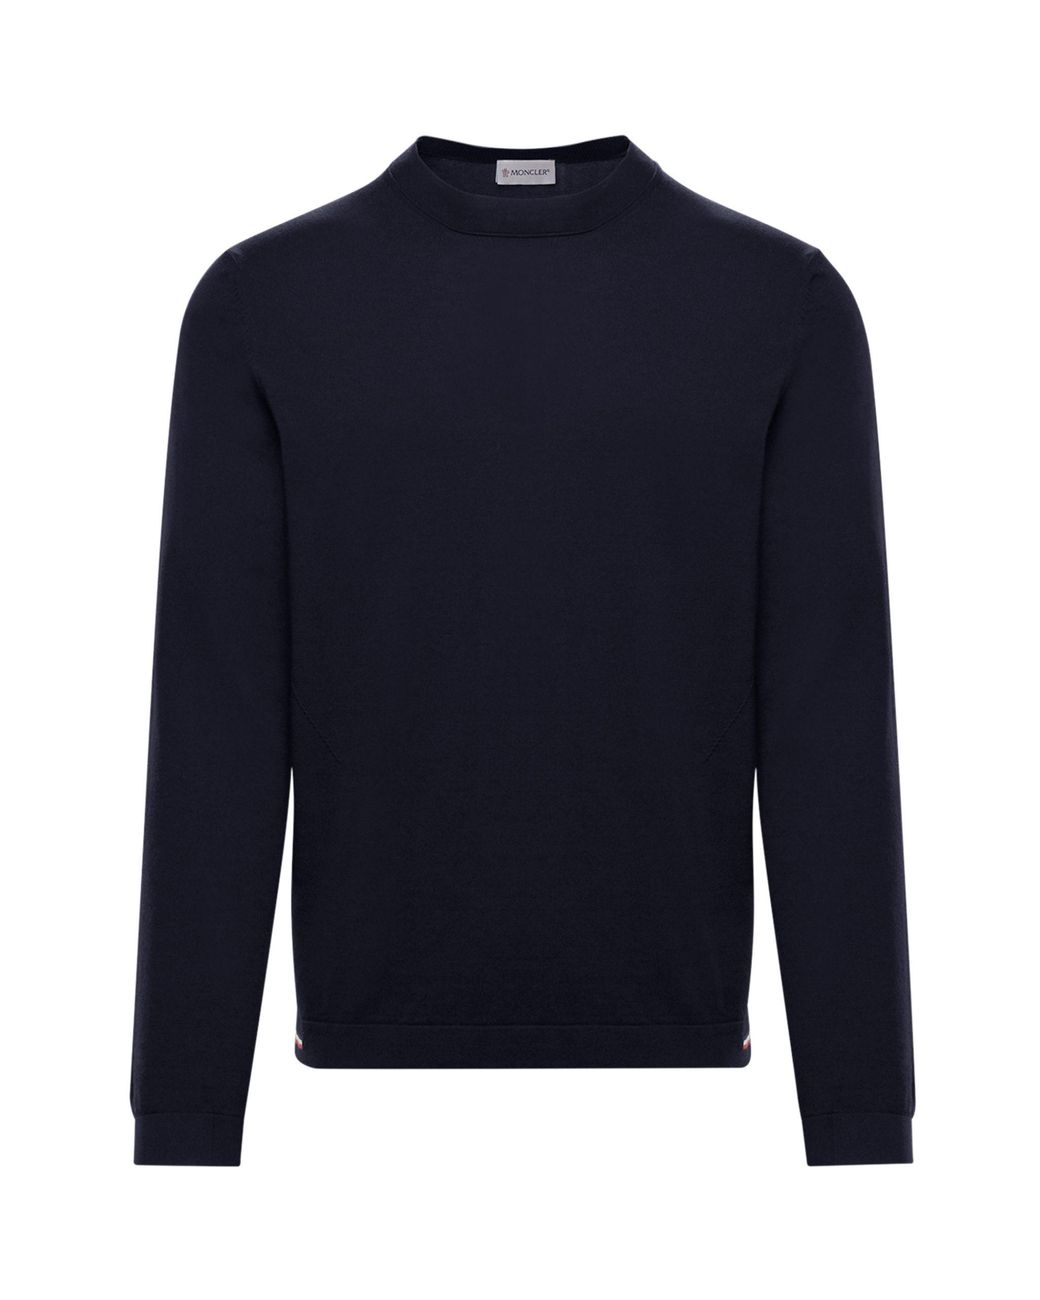 Moncler Cotton Crewneck Sweater in Blue for Men - Lyst